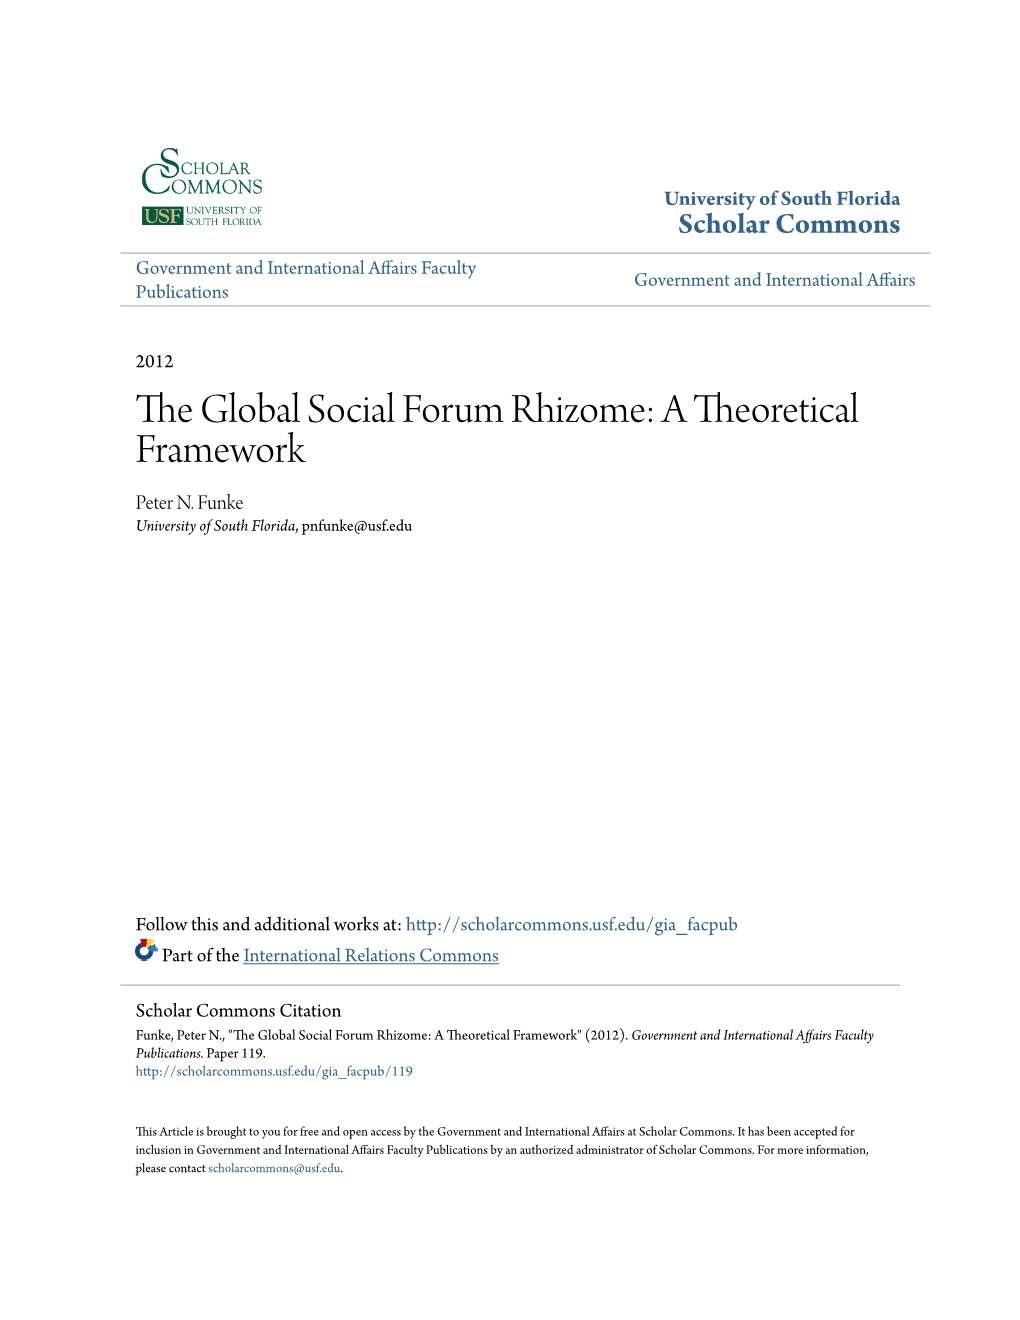 The Global Social Forum Rhizome: a Theoretical Framework Peter N